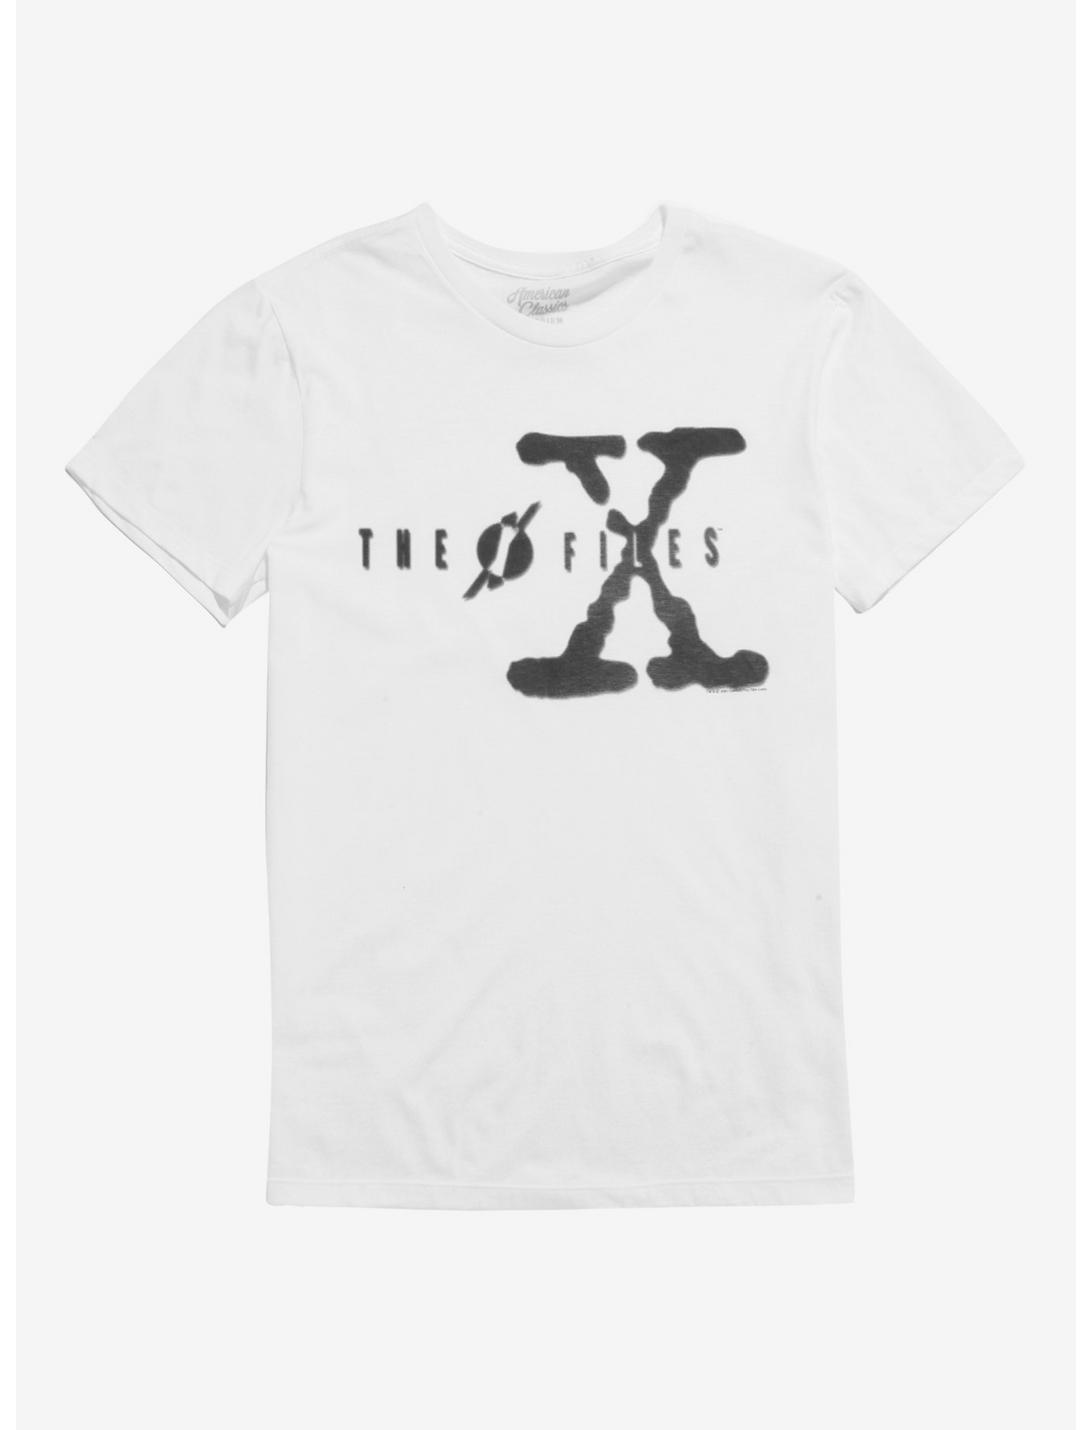 The X-Files Logo T-Shirt | Hot Topic